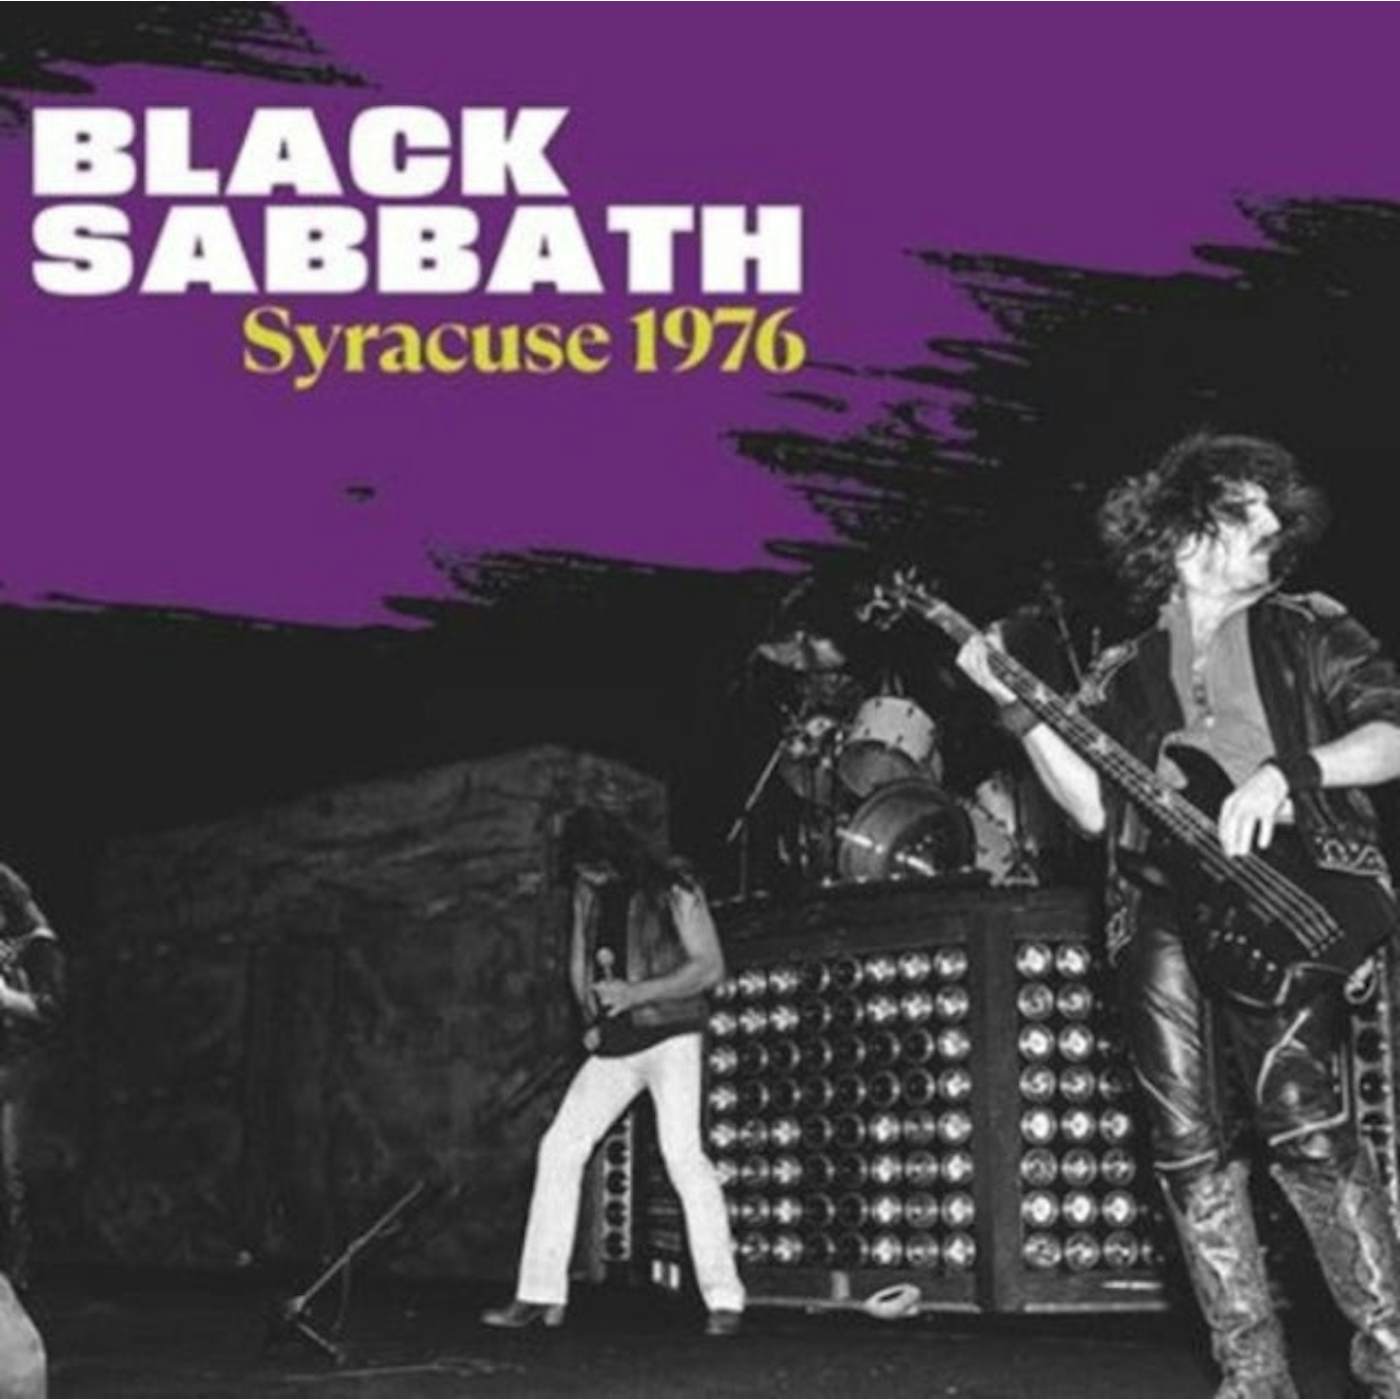 Black Sabbath LP - Syracuse 1976 - The New York State Broadcast (Vinyl)